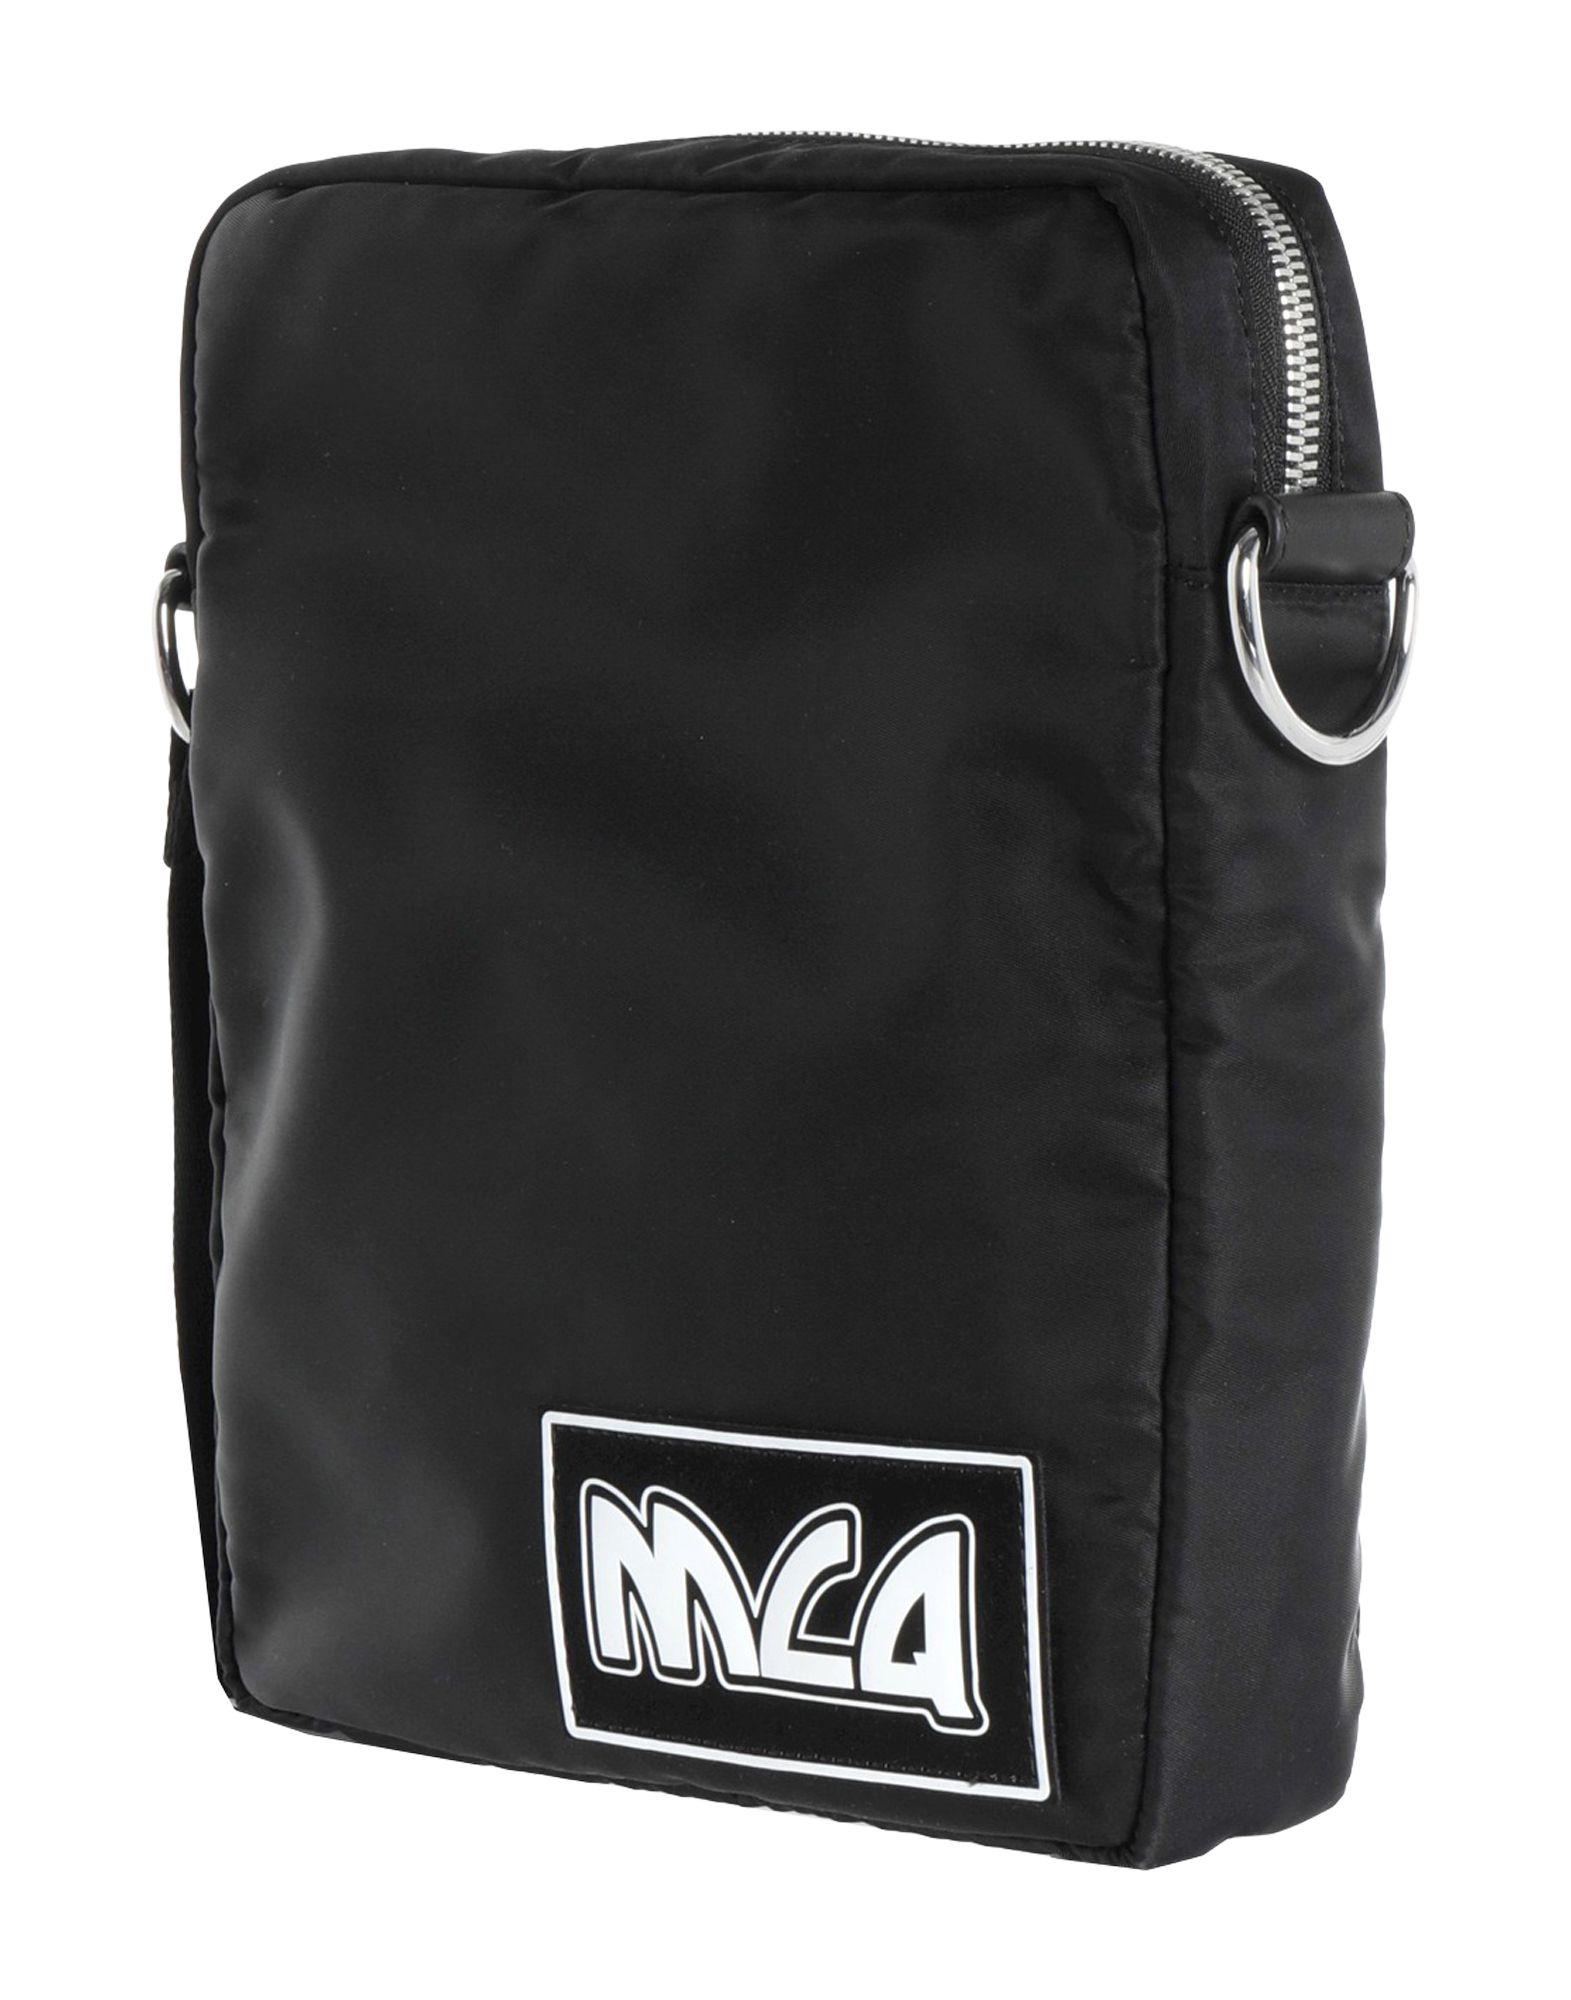 McQ Backpacks & Bum Bags in Black for Men - Lyst